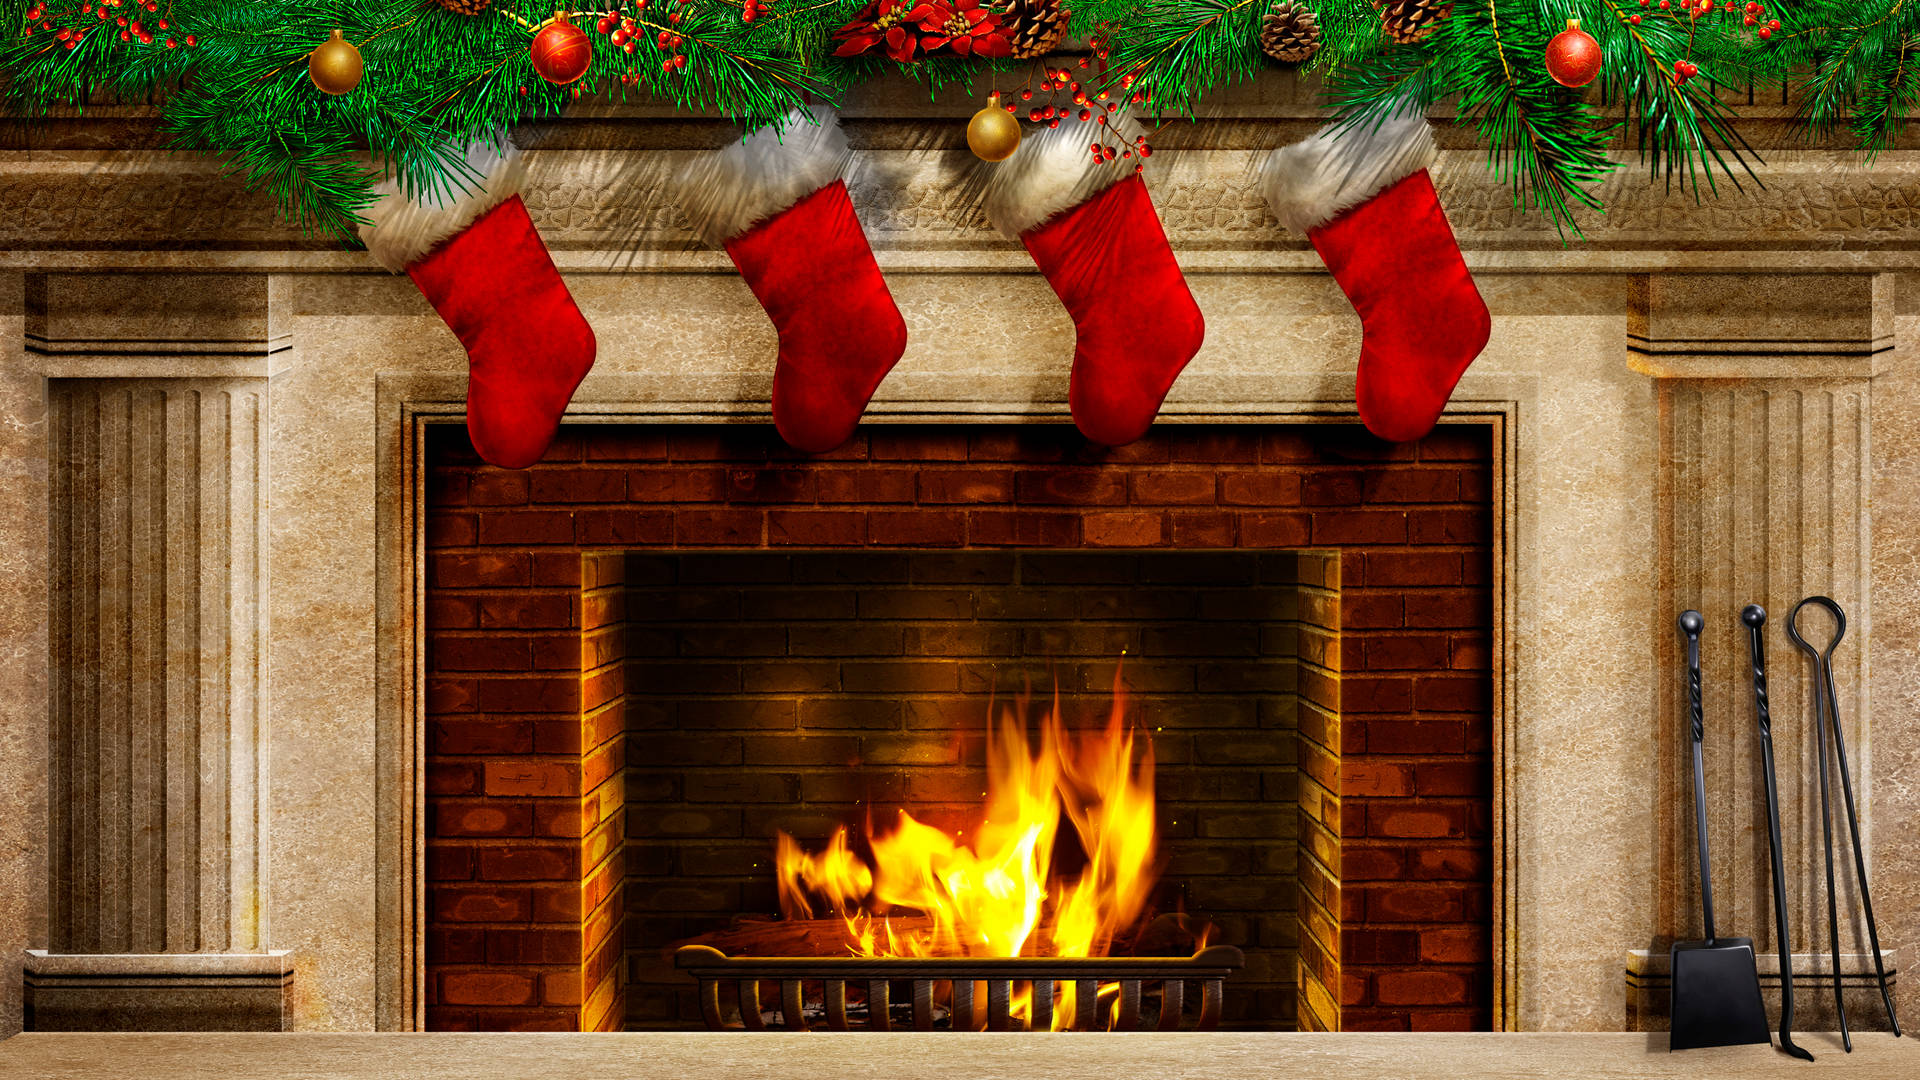 Top 999+ Beautiful Christmas Wallpaper Full HD, 4K✅Free to Use